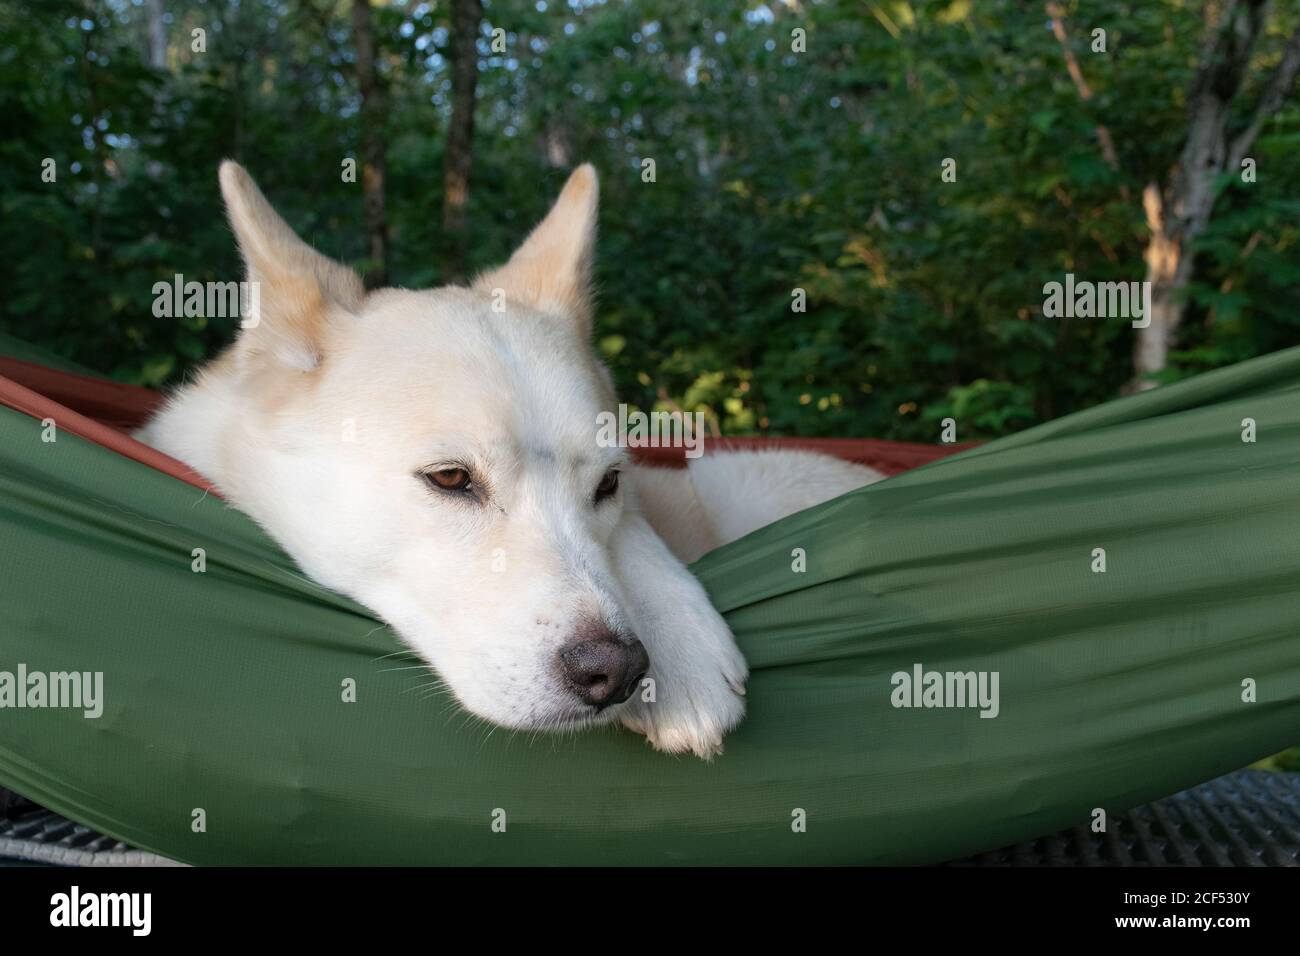 dog resting on a hammock Stock Photo